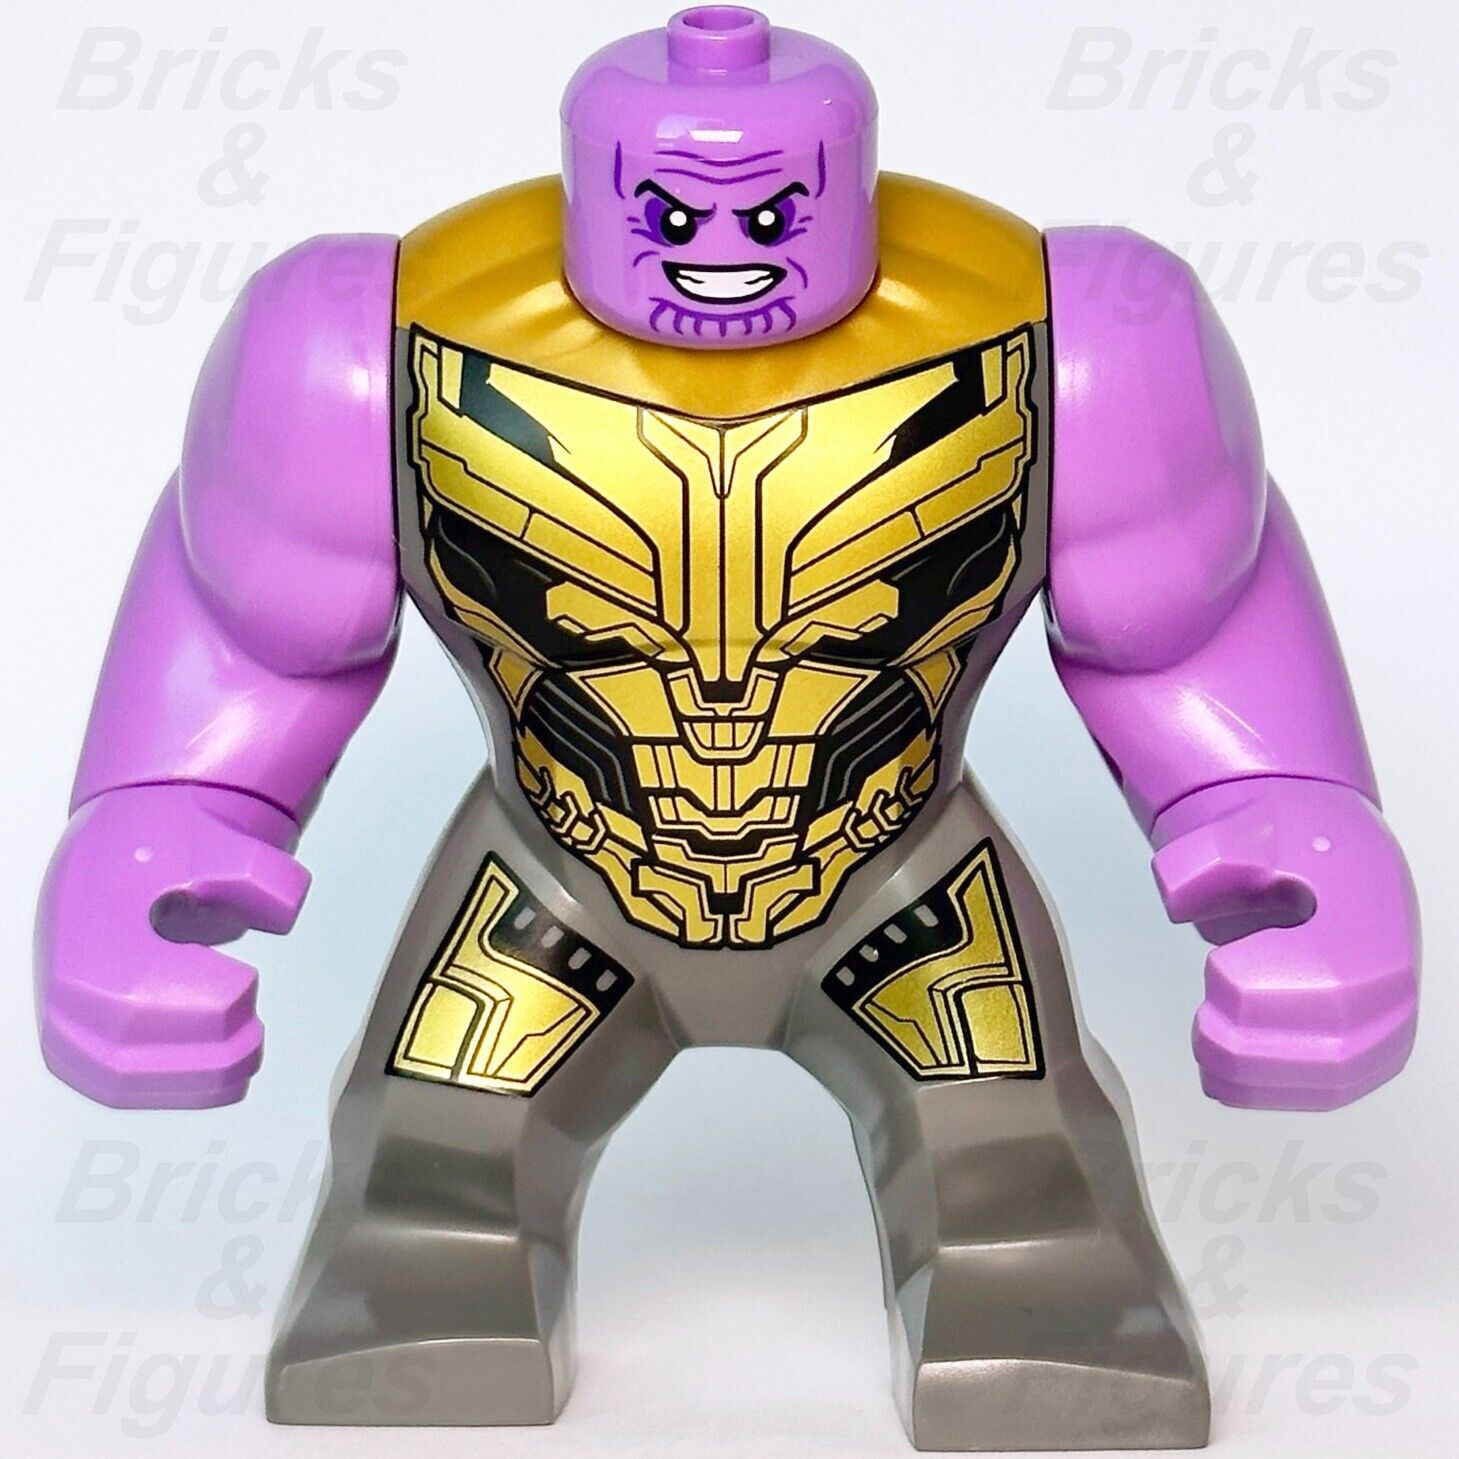 Avengers Lego Marvel Superheroes Endgame Thanos 76131 Mini Fig Minifigure